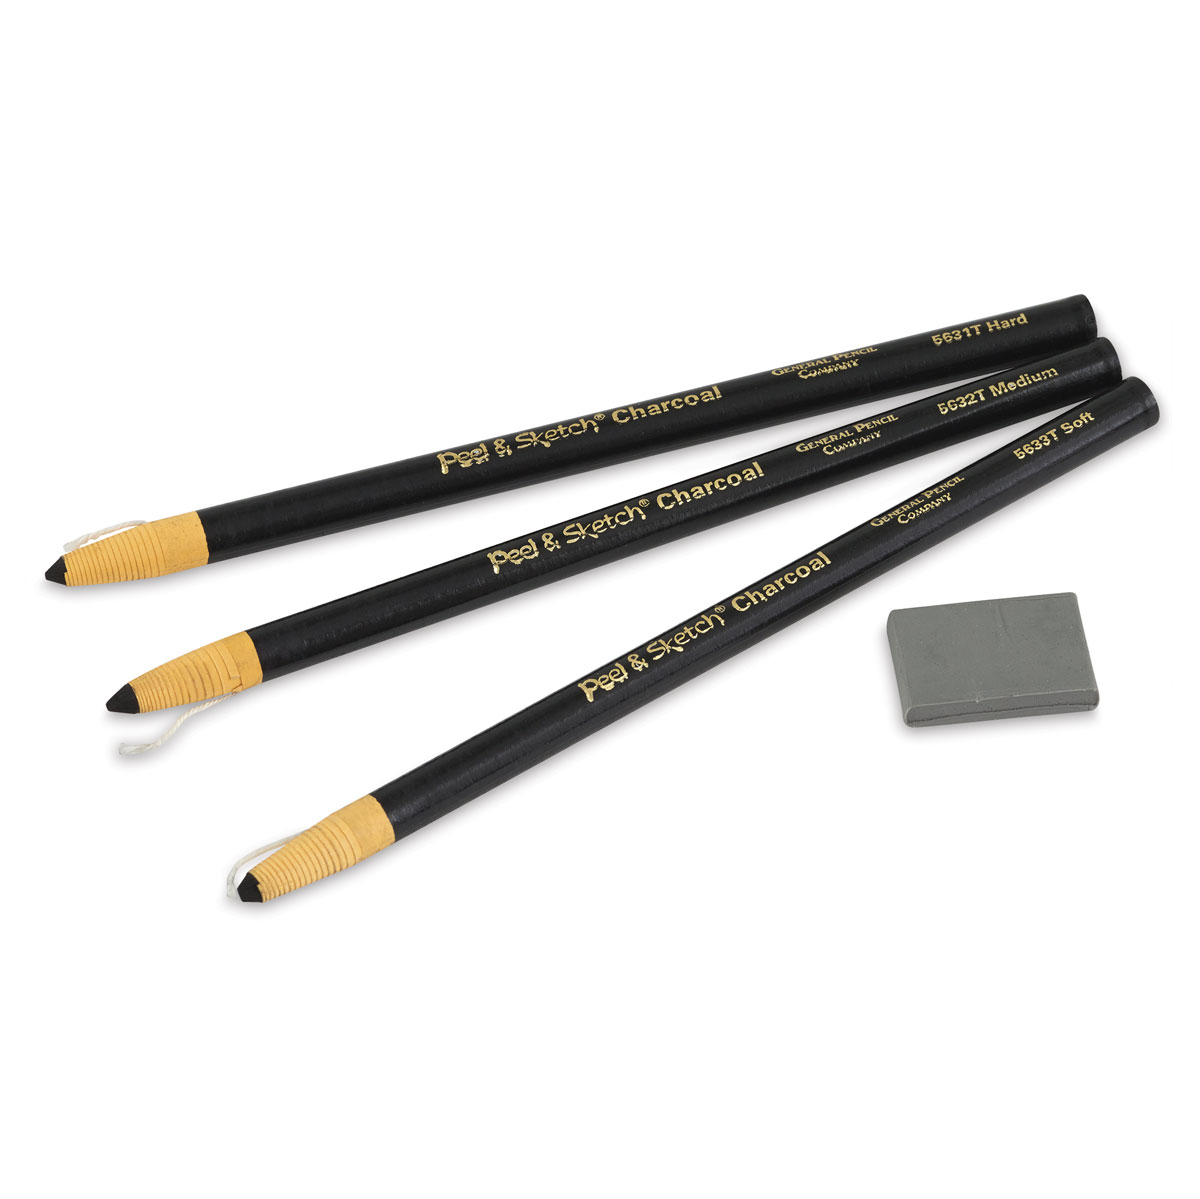 K Kwokker 75pcs, Pastel Pencils, Charcoal Pencils for Drawing